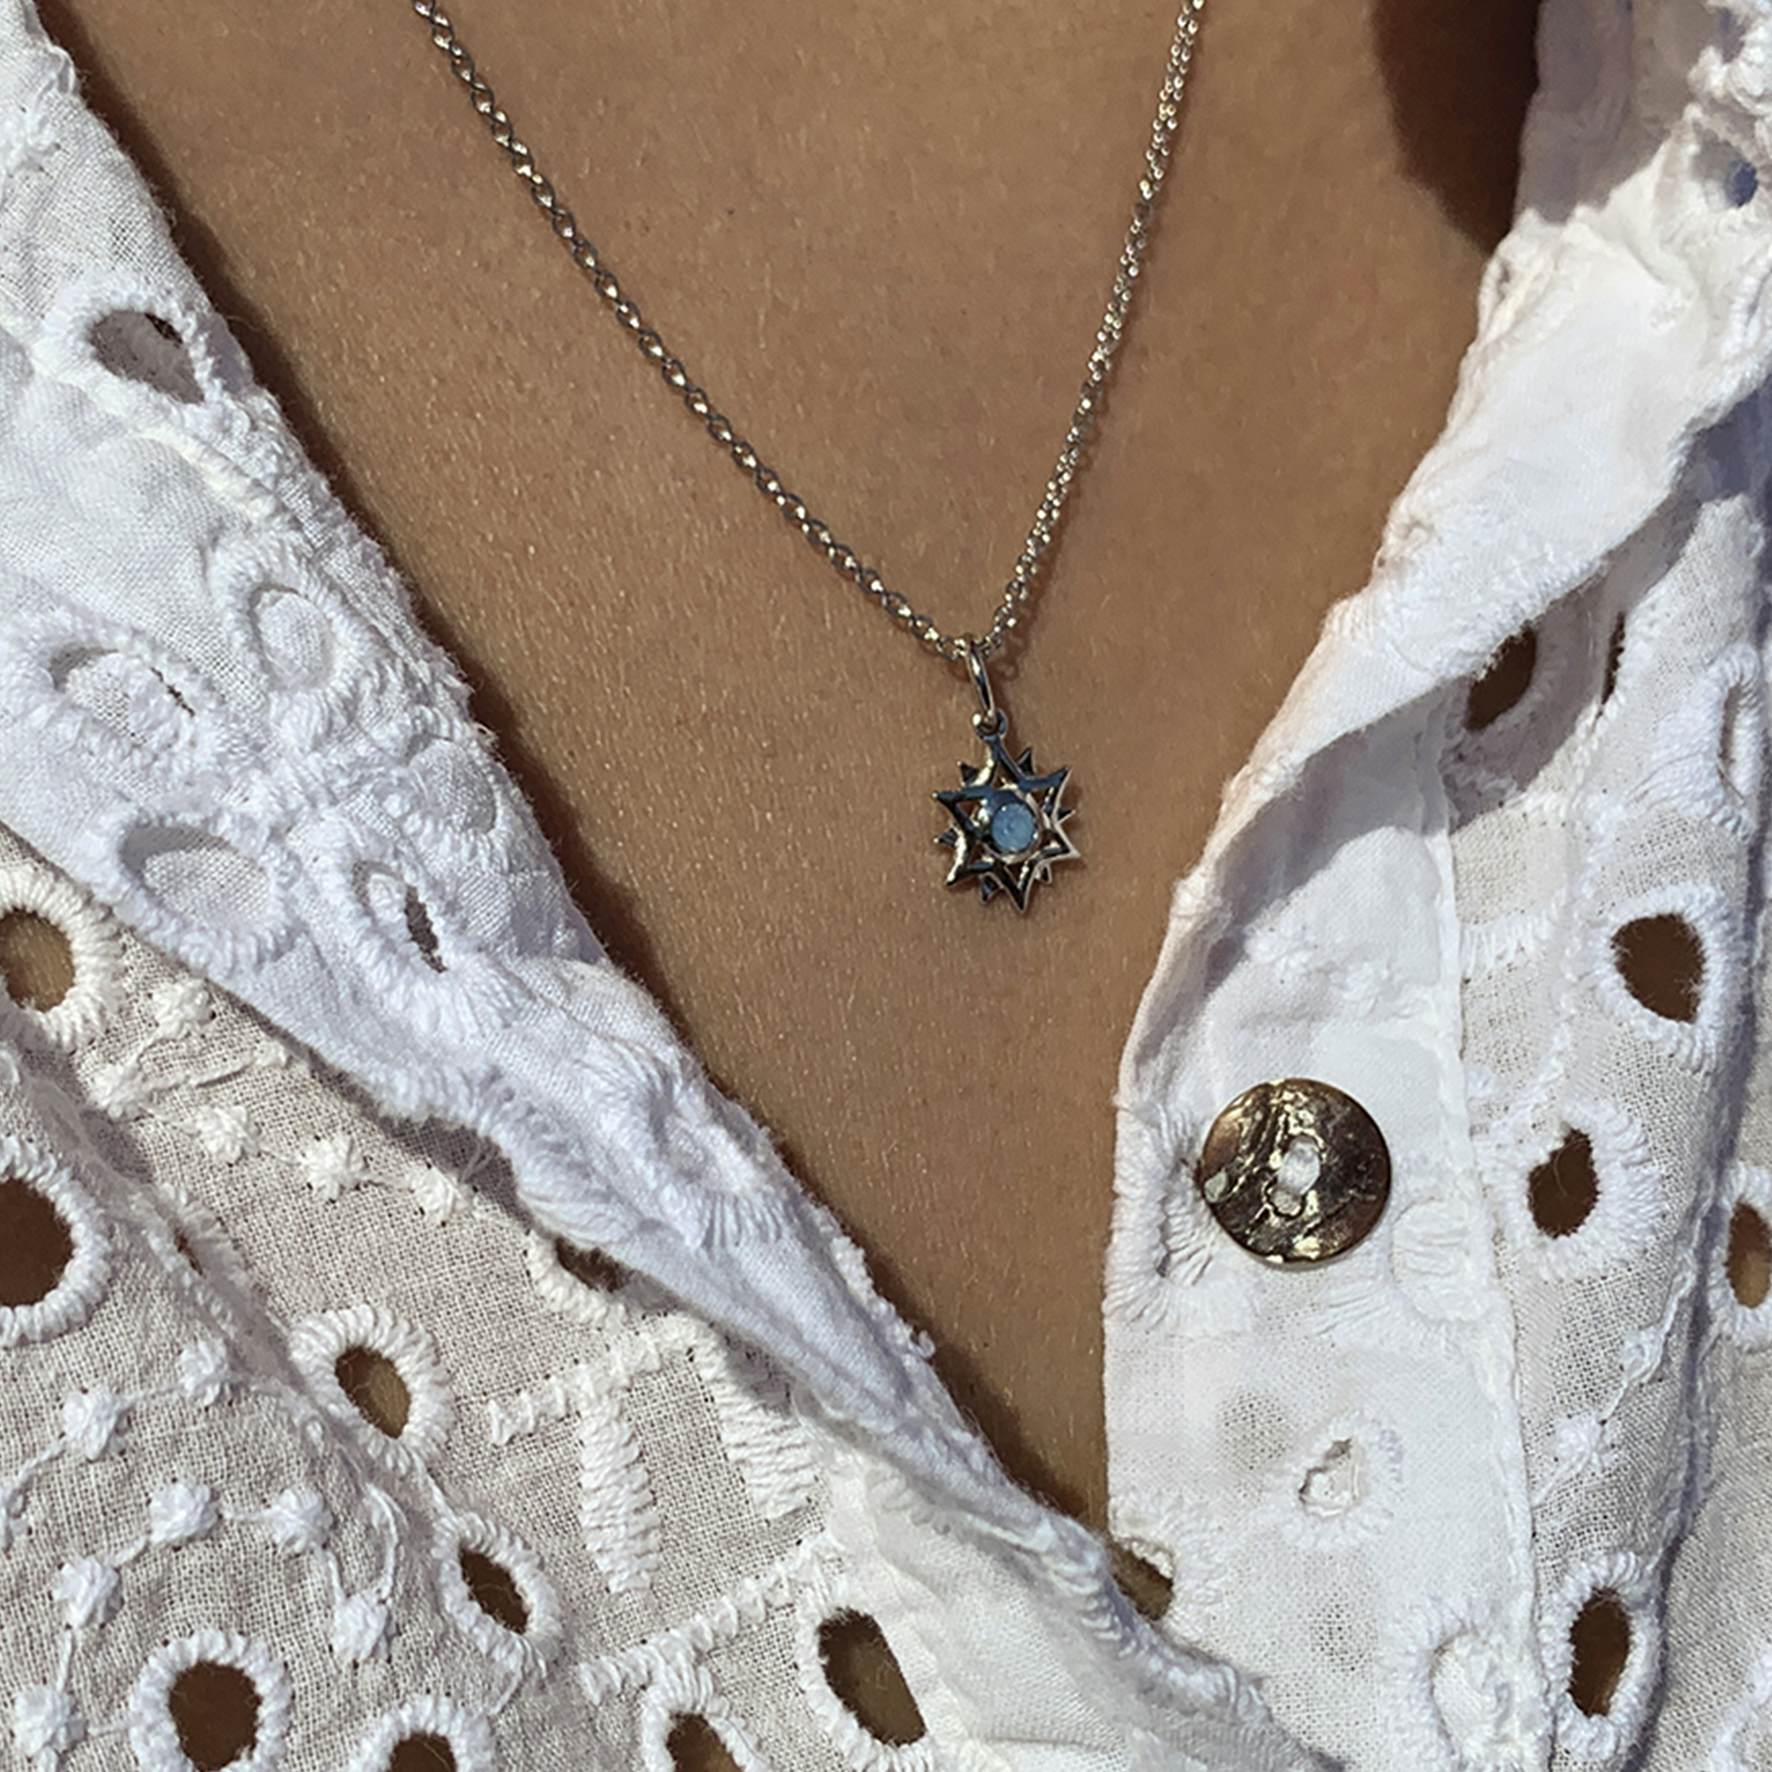 Olivia By Sistie Pendant Necklace Rose Opal fra Sistie i Forgyldt-Sølv Sterling 925